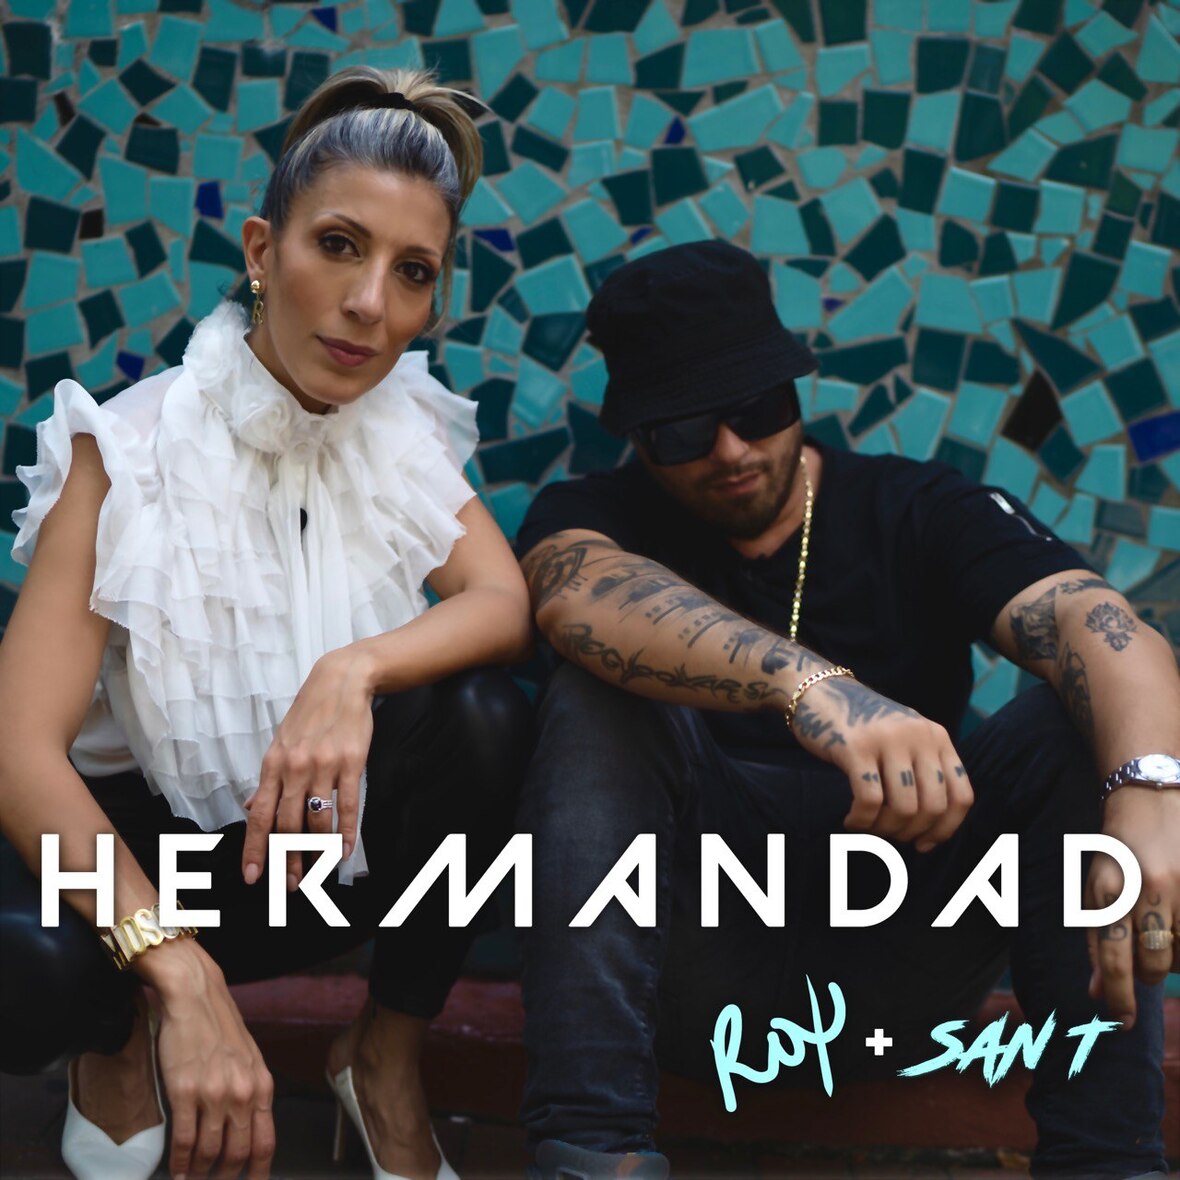 ROX junto a SAN T lanzan tema “Hermandad”